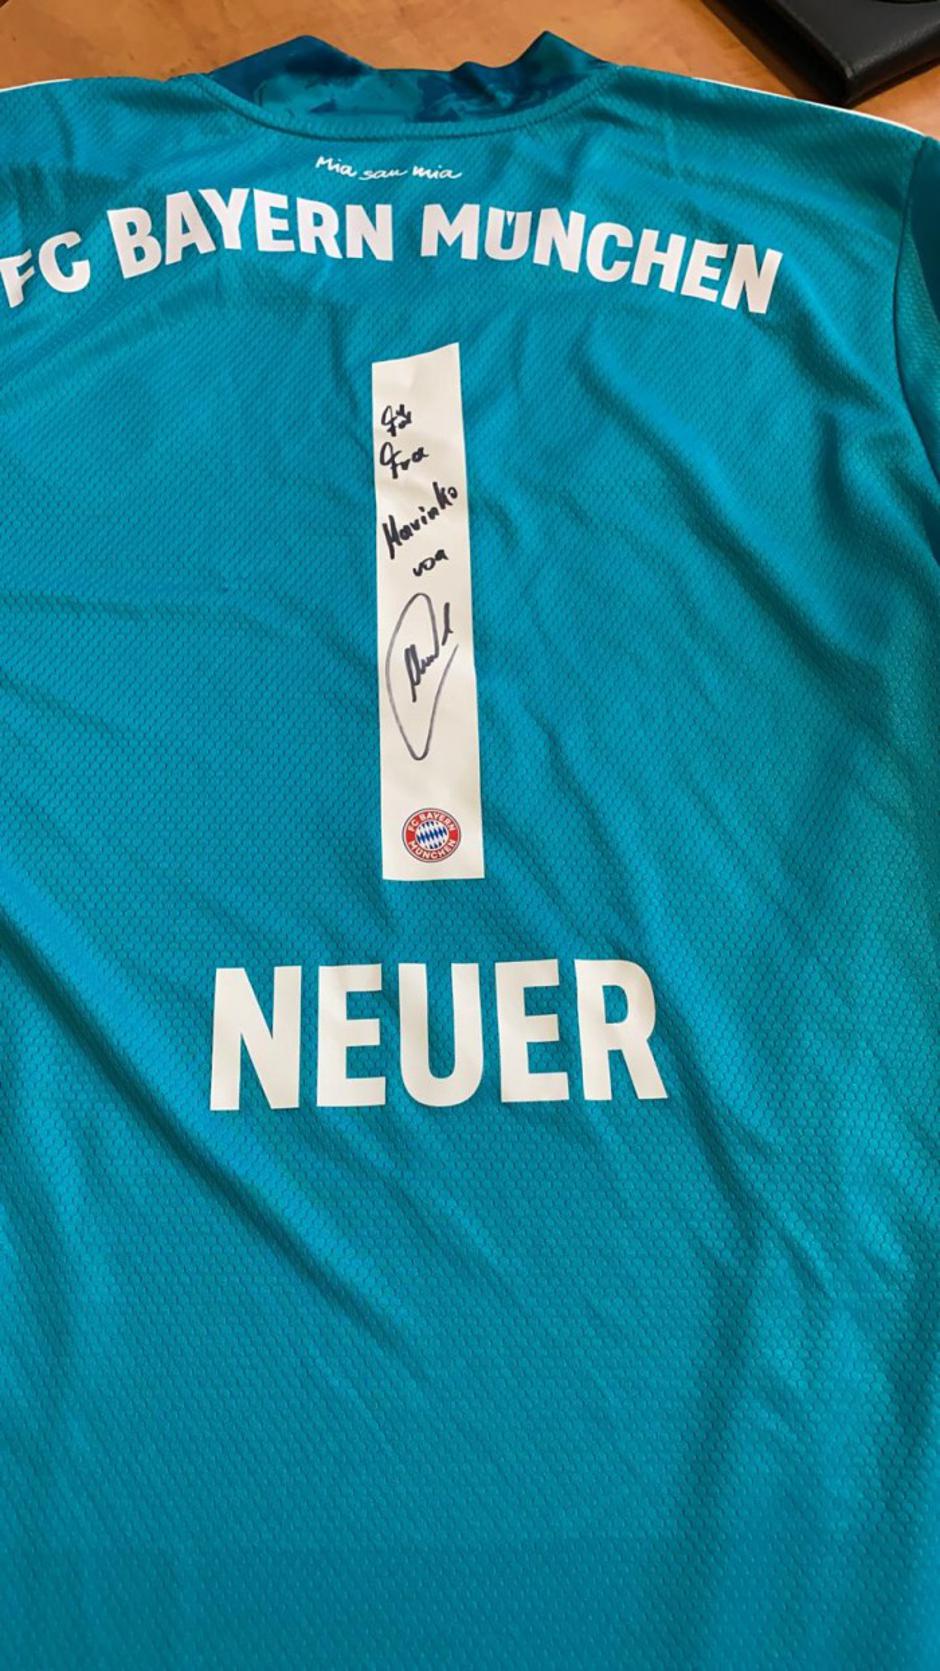 Manuel Neuer i fra Marinko Vukman